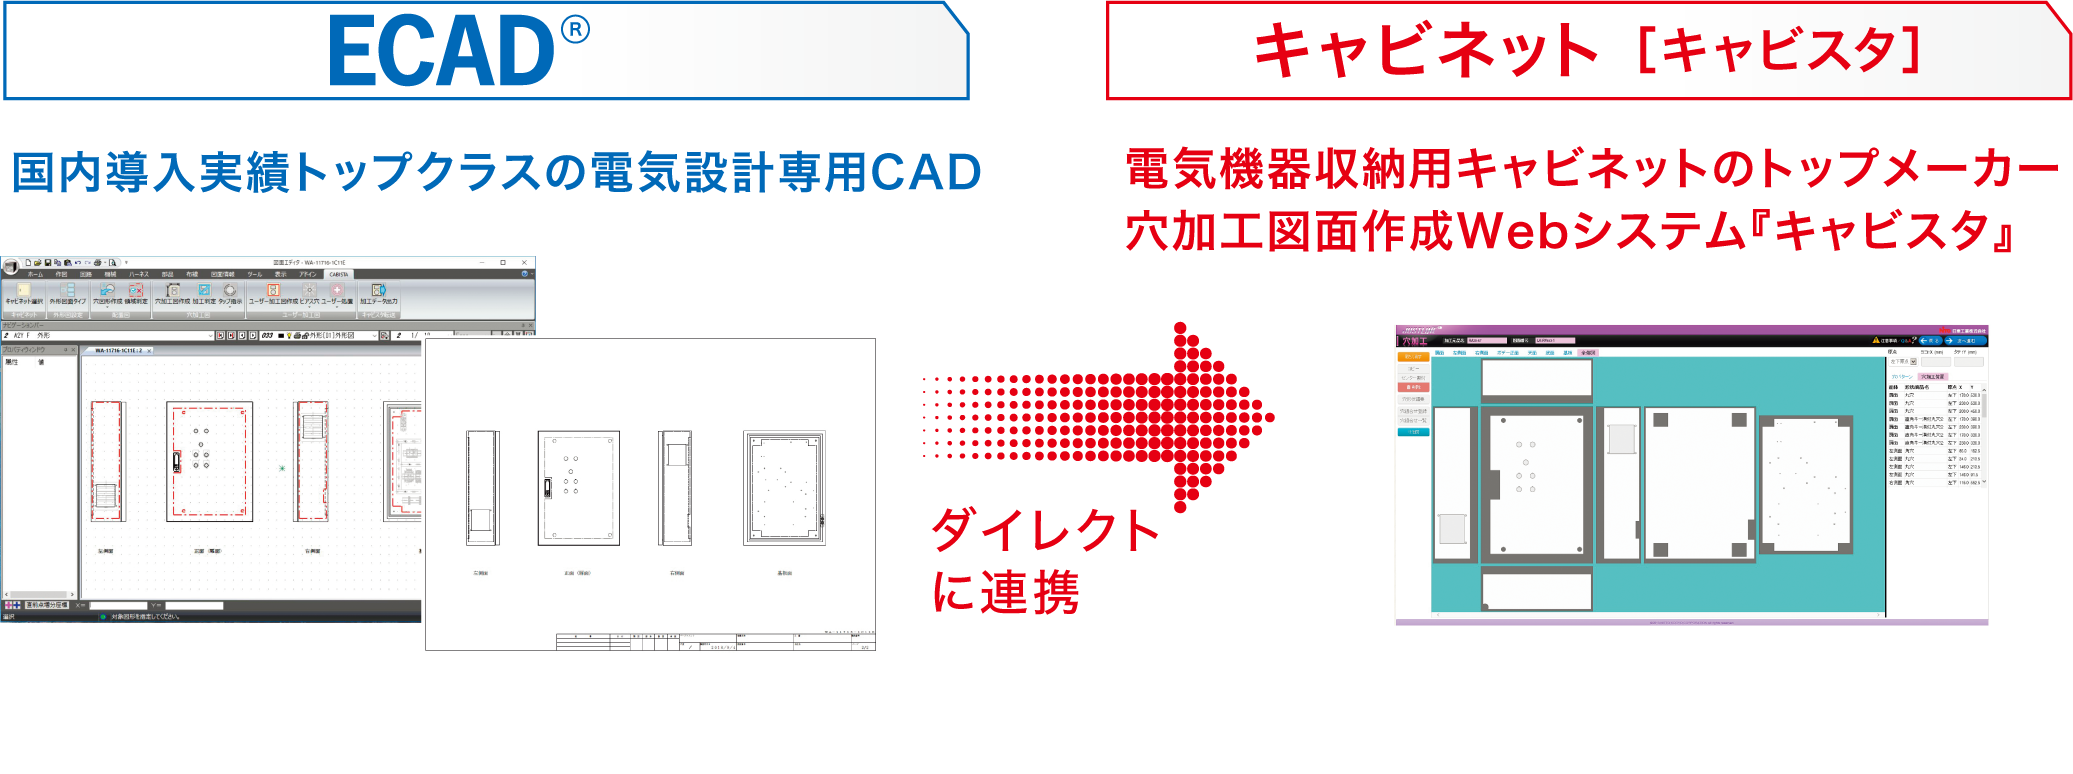 ECAD®国内導入実績トップクラスの電気設計専用CAD ダイレクトに連携 キャビスタ